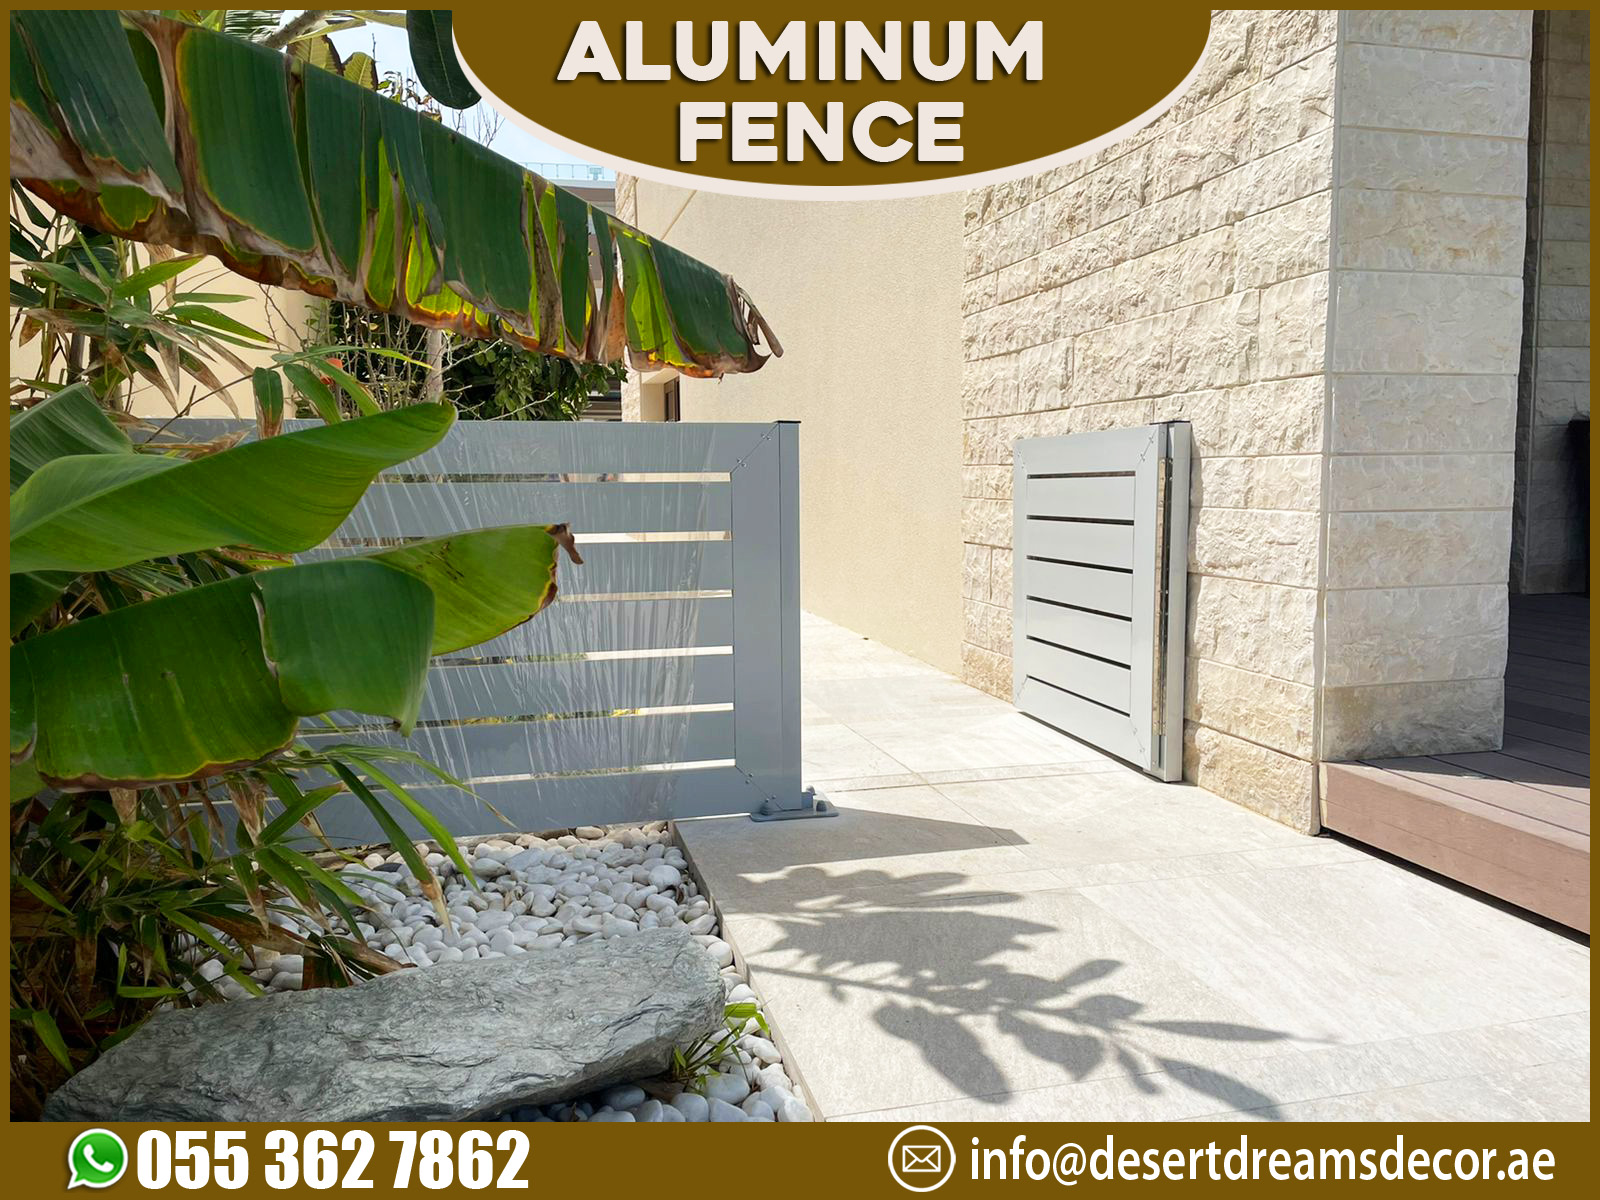 Aluminium fence dubai, aluminium fence uae, aluminium fence abu dhabi (9).jpg